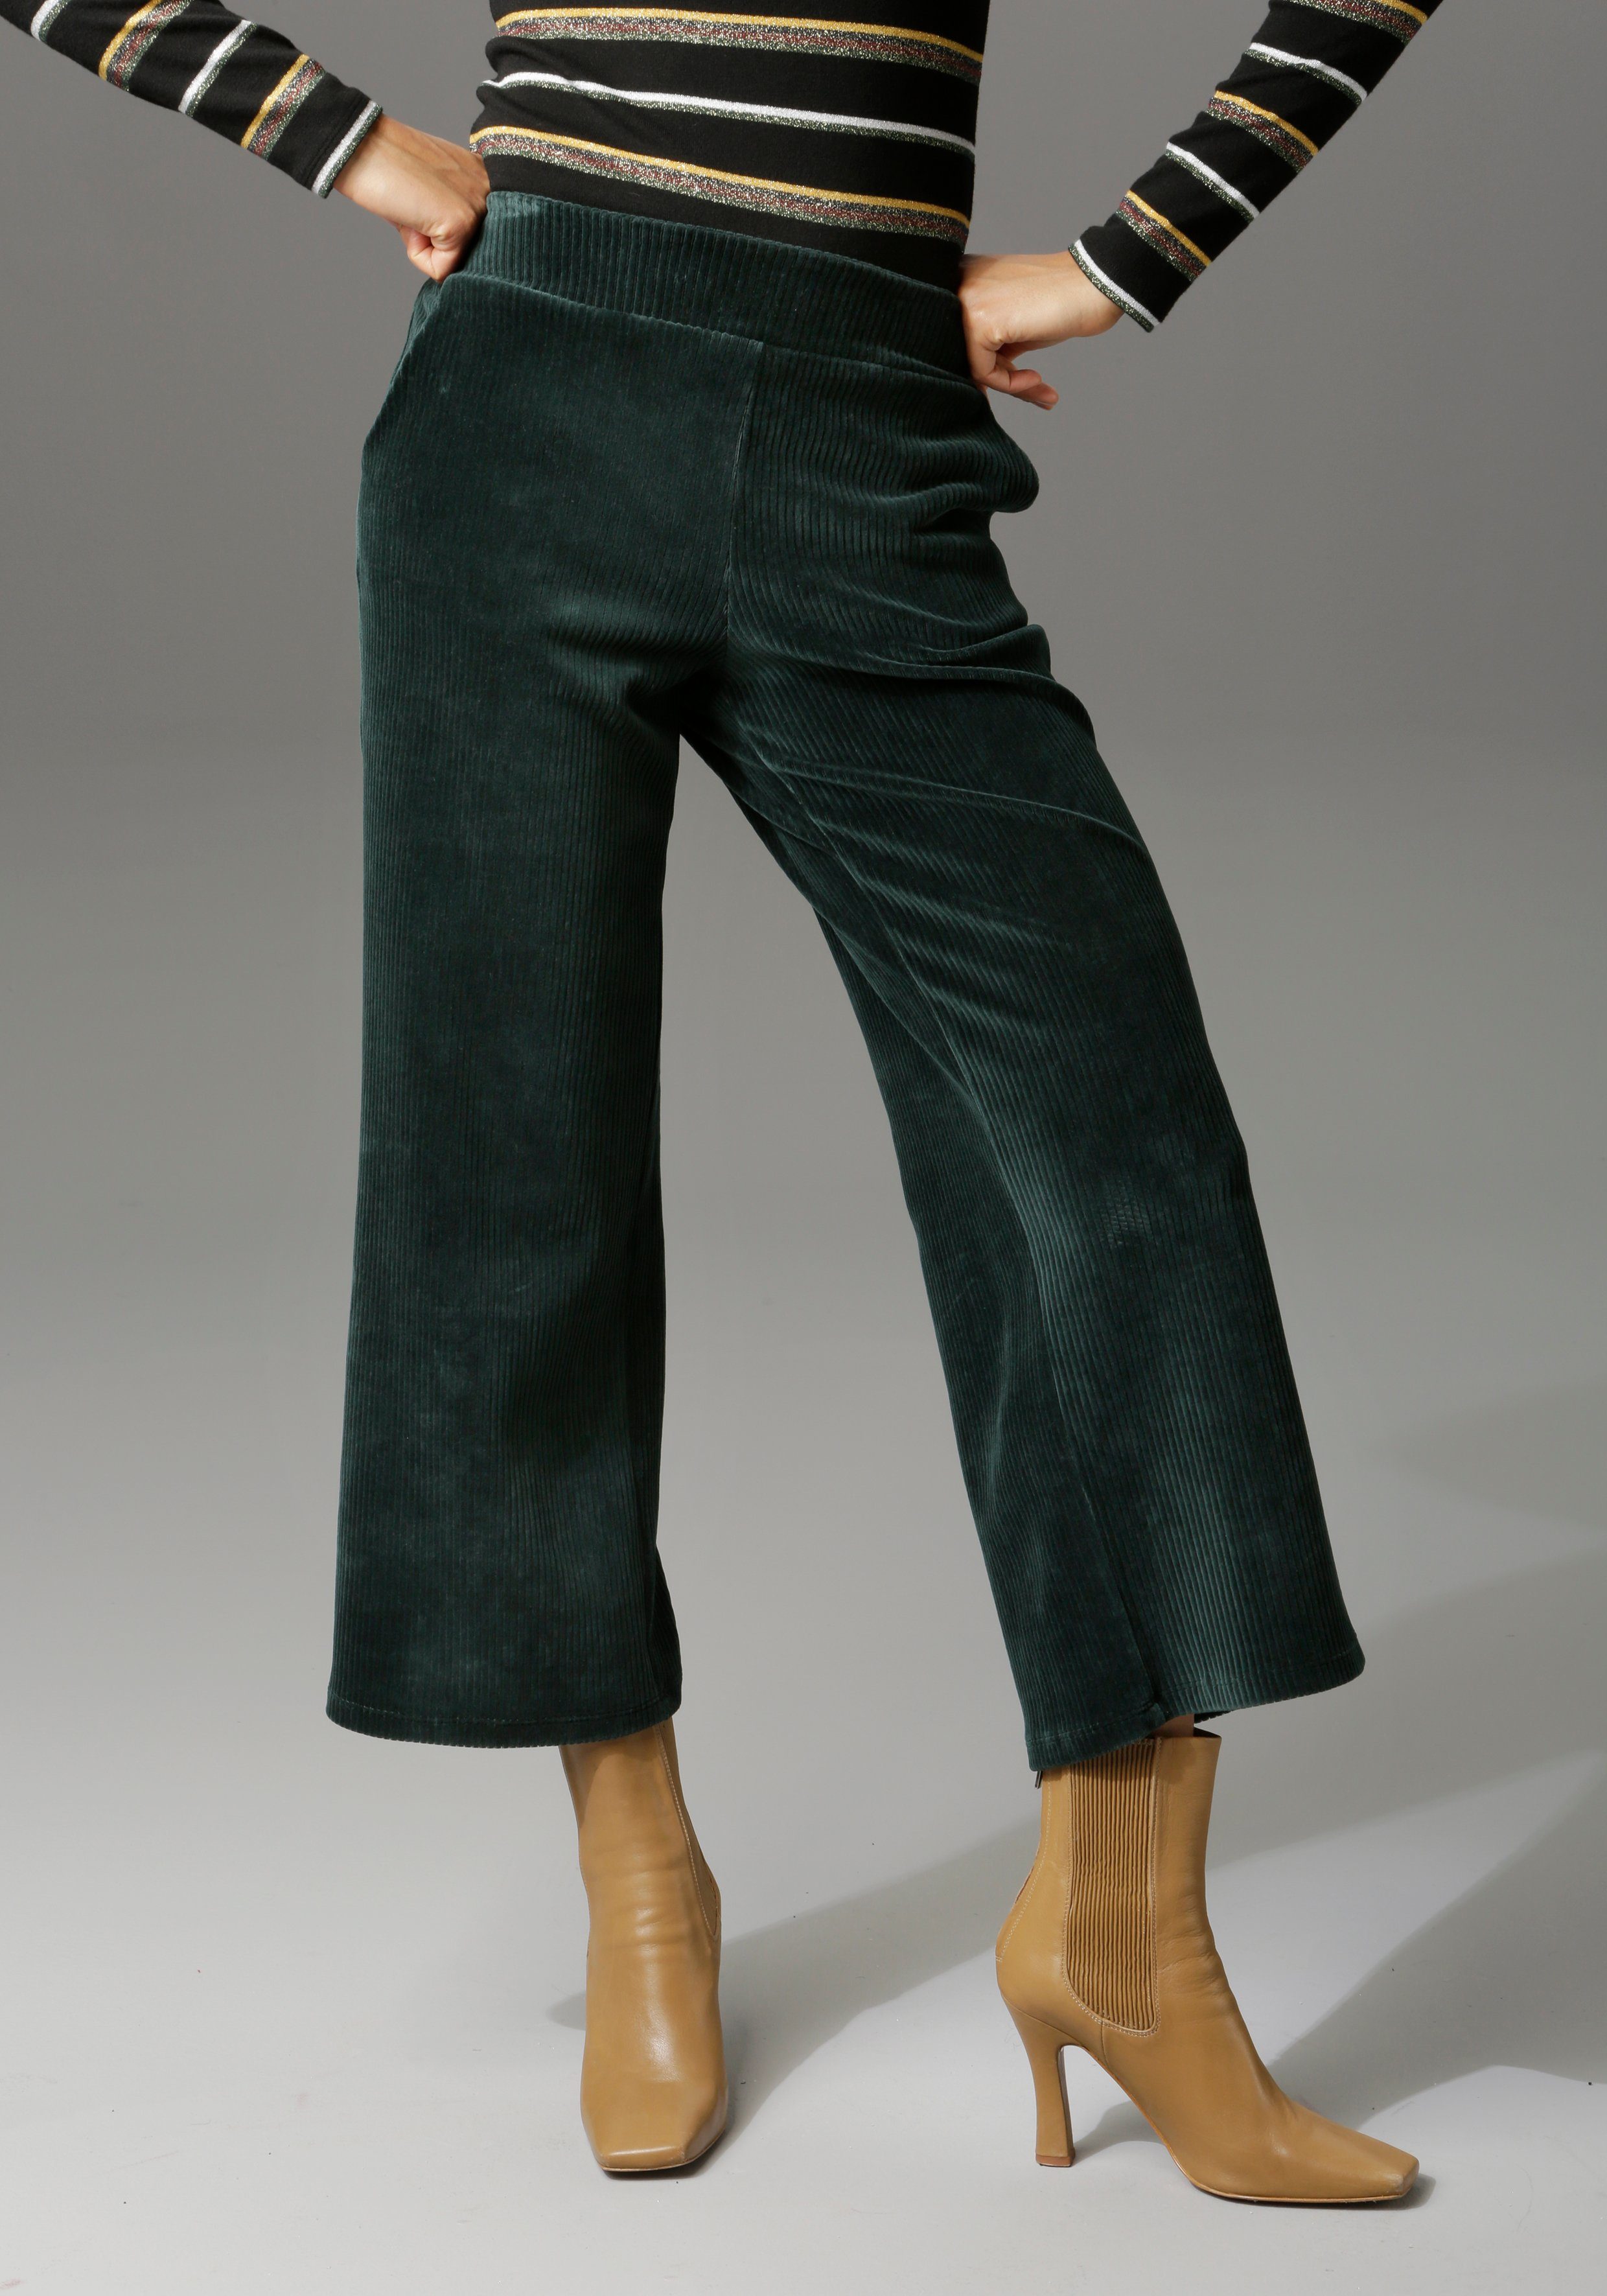 Damen Hosen Aniston CASUAL Cordhose in trendiger Culotte-Form